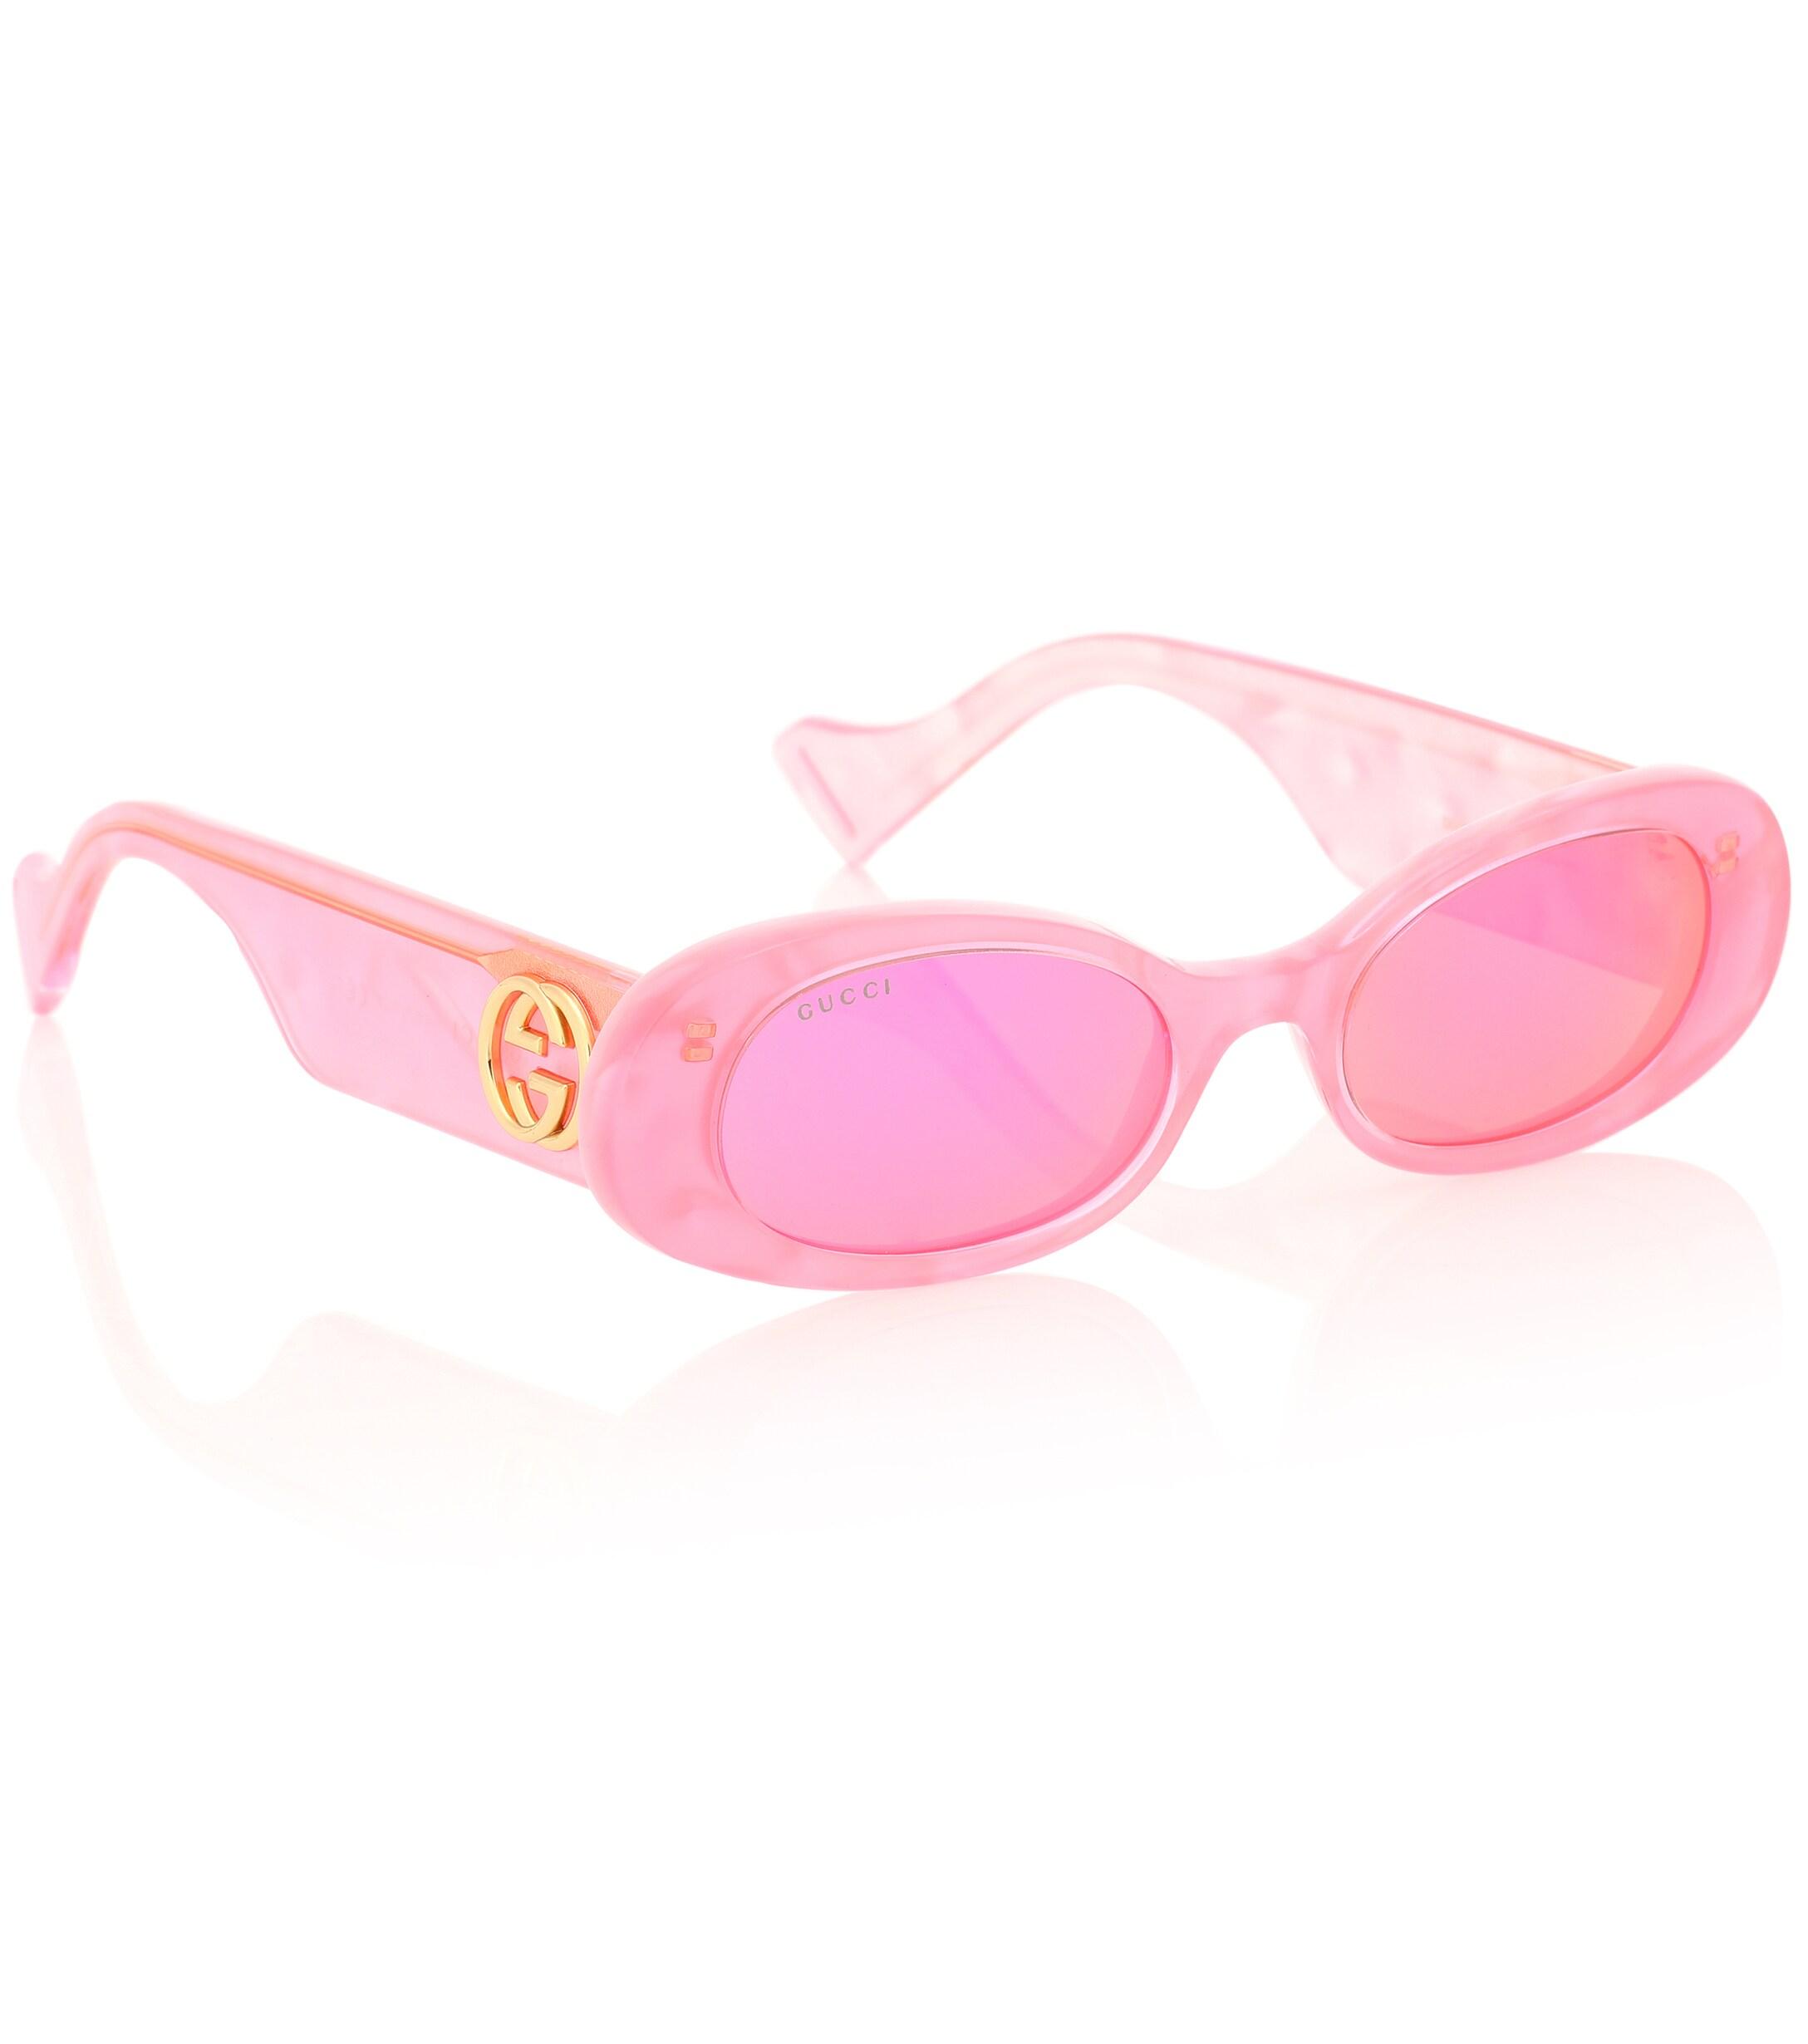 salt warrant license Gucci Oval Sunglasses in Pink | Lyst